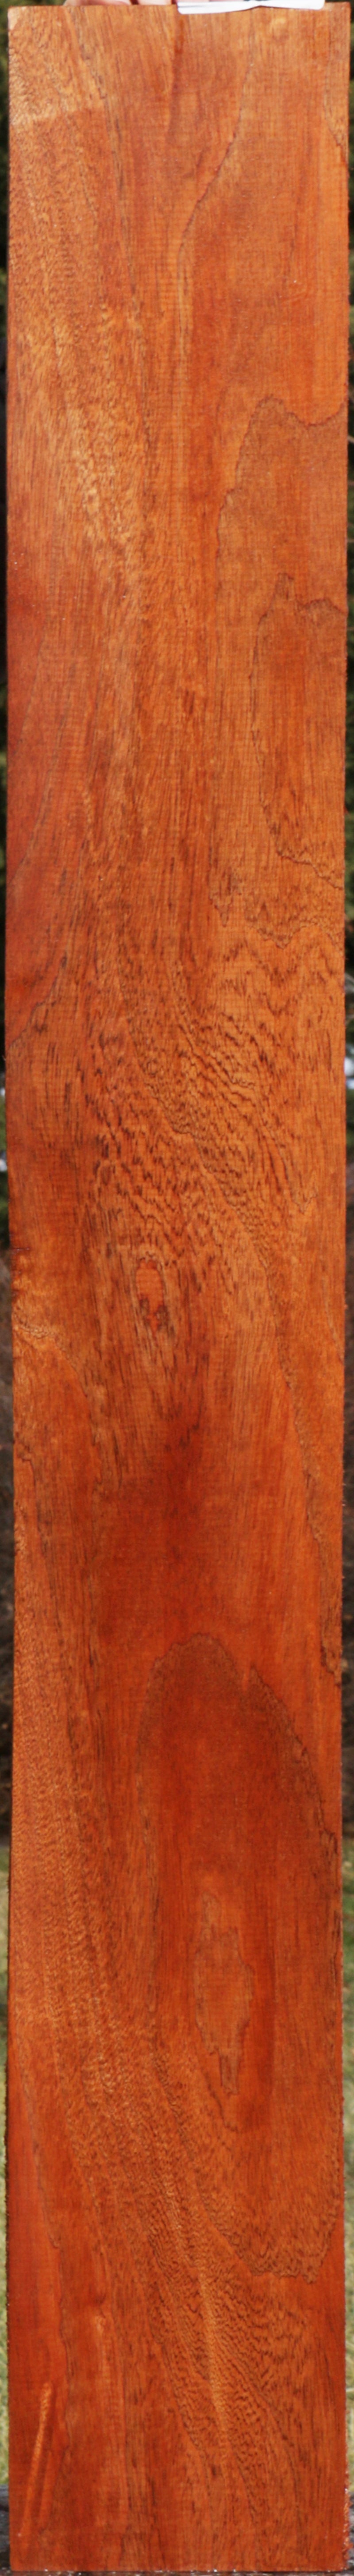 Sipo Lumber